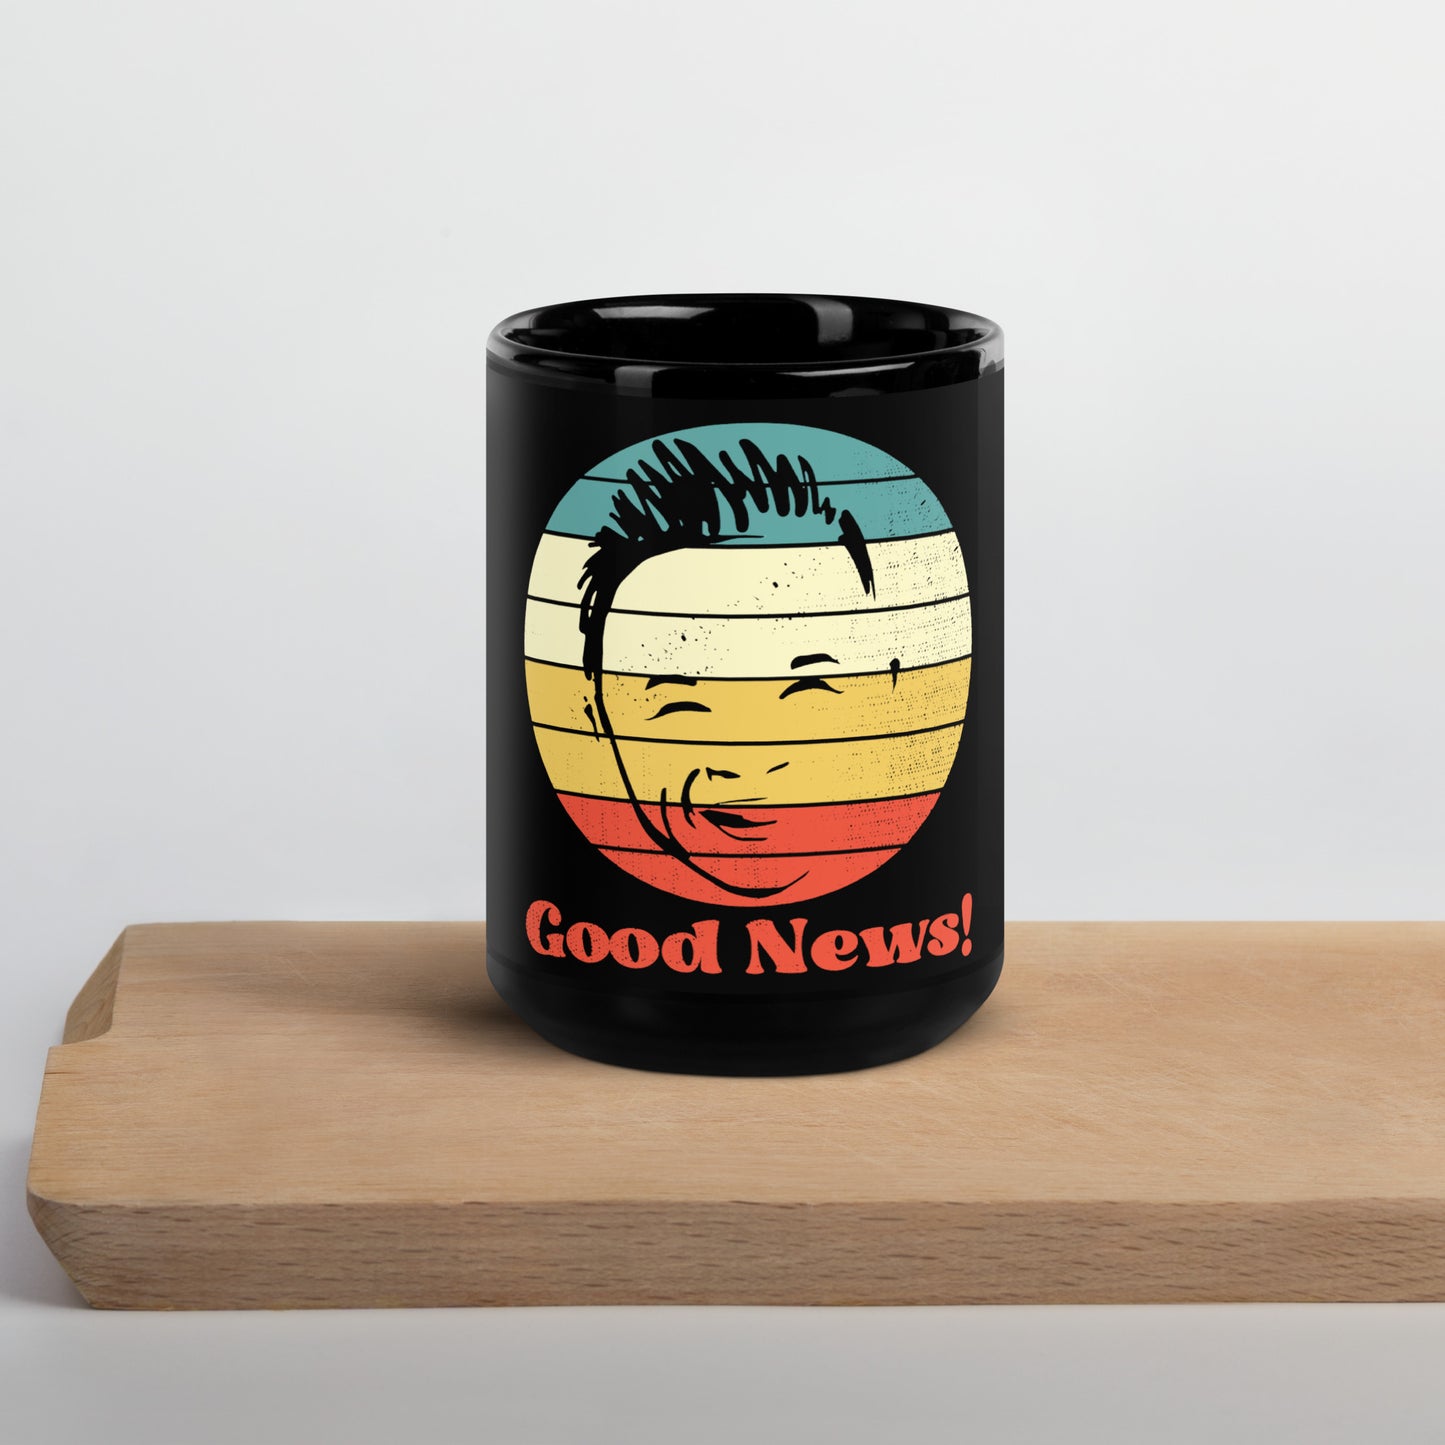 Jack Jack's "Good News" Black Glossy Mug